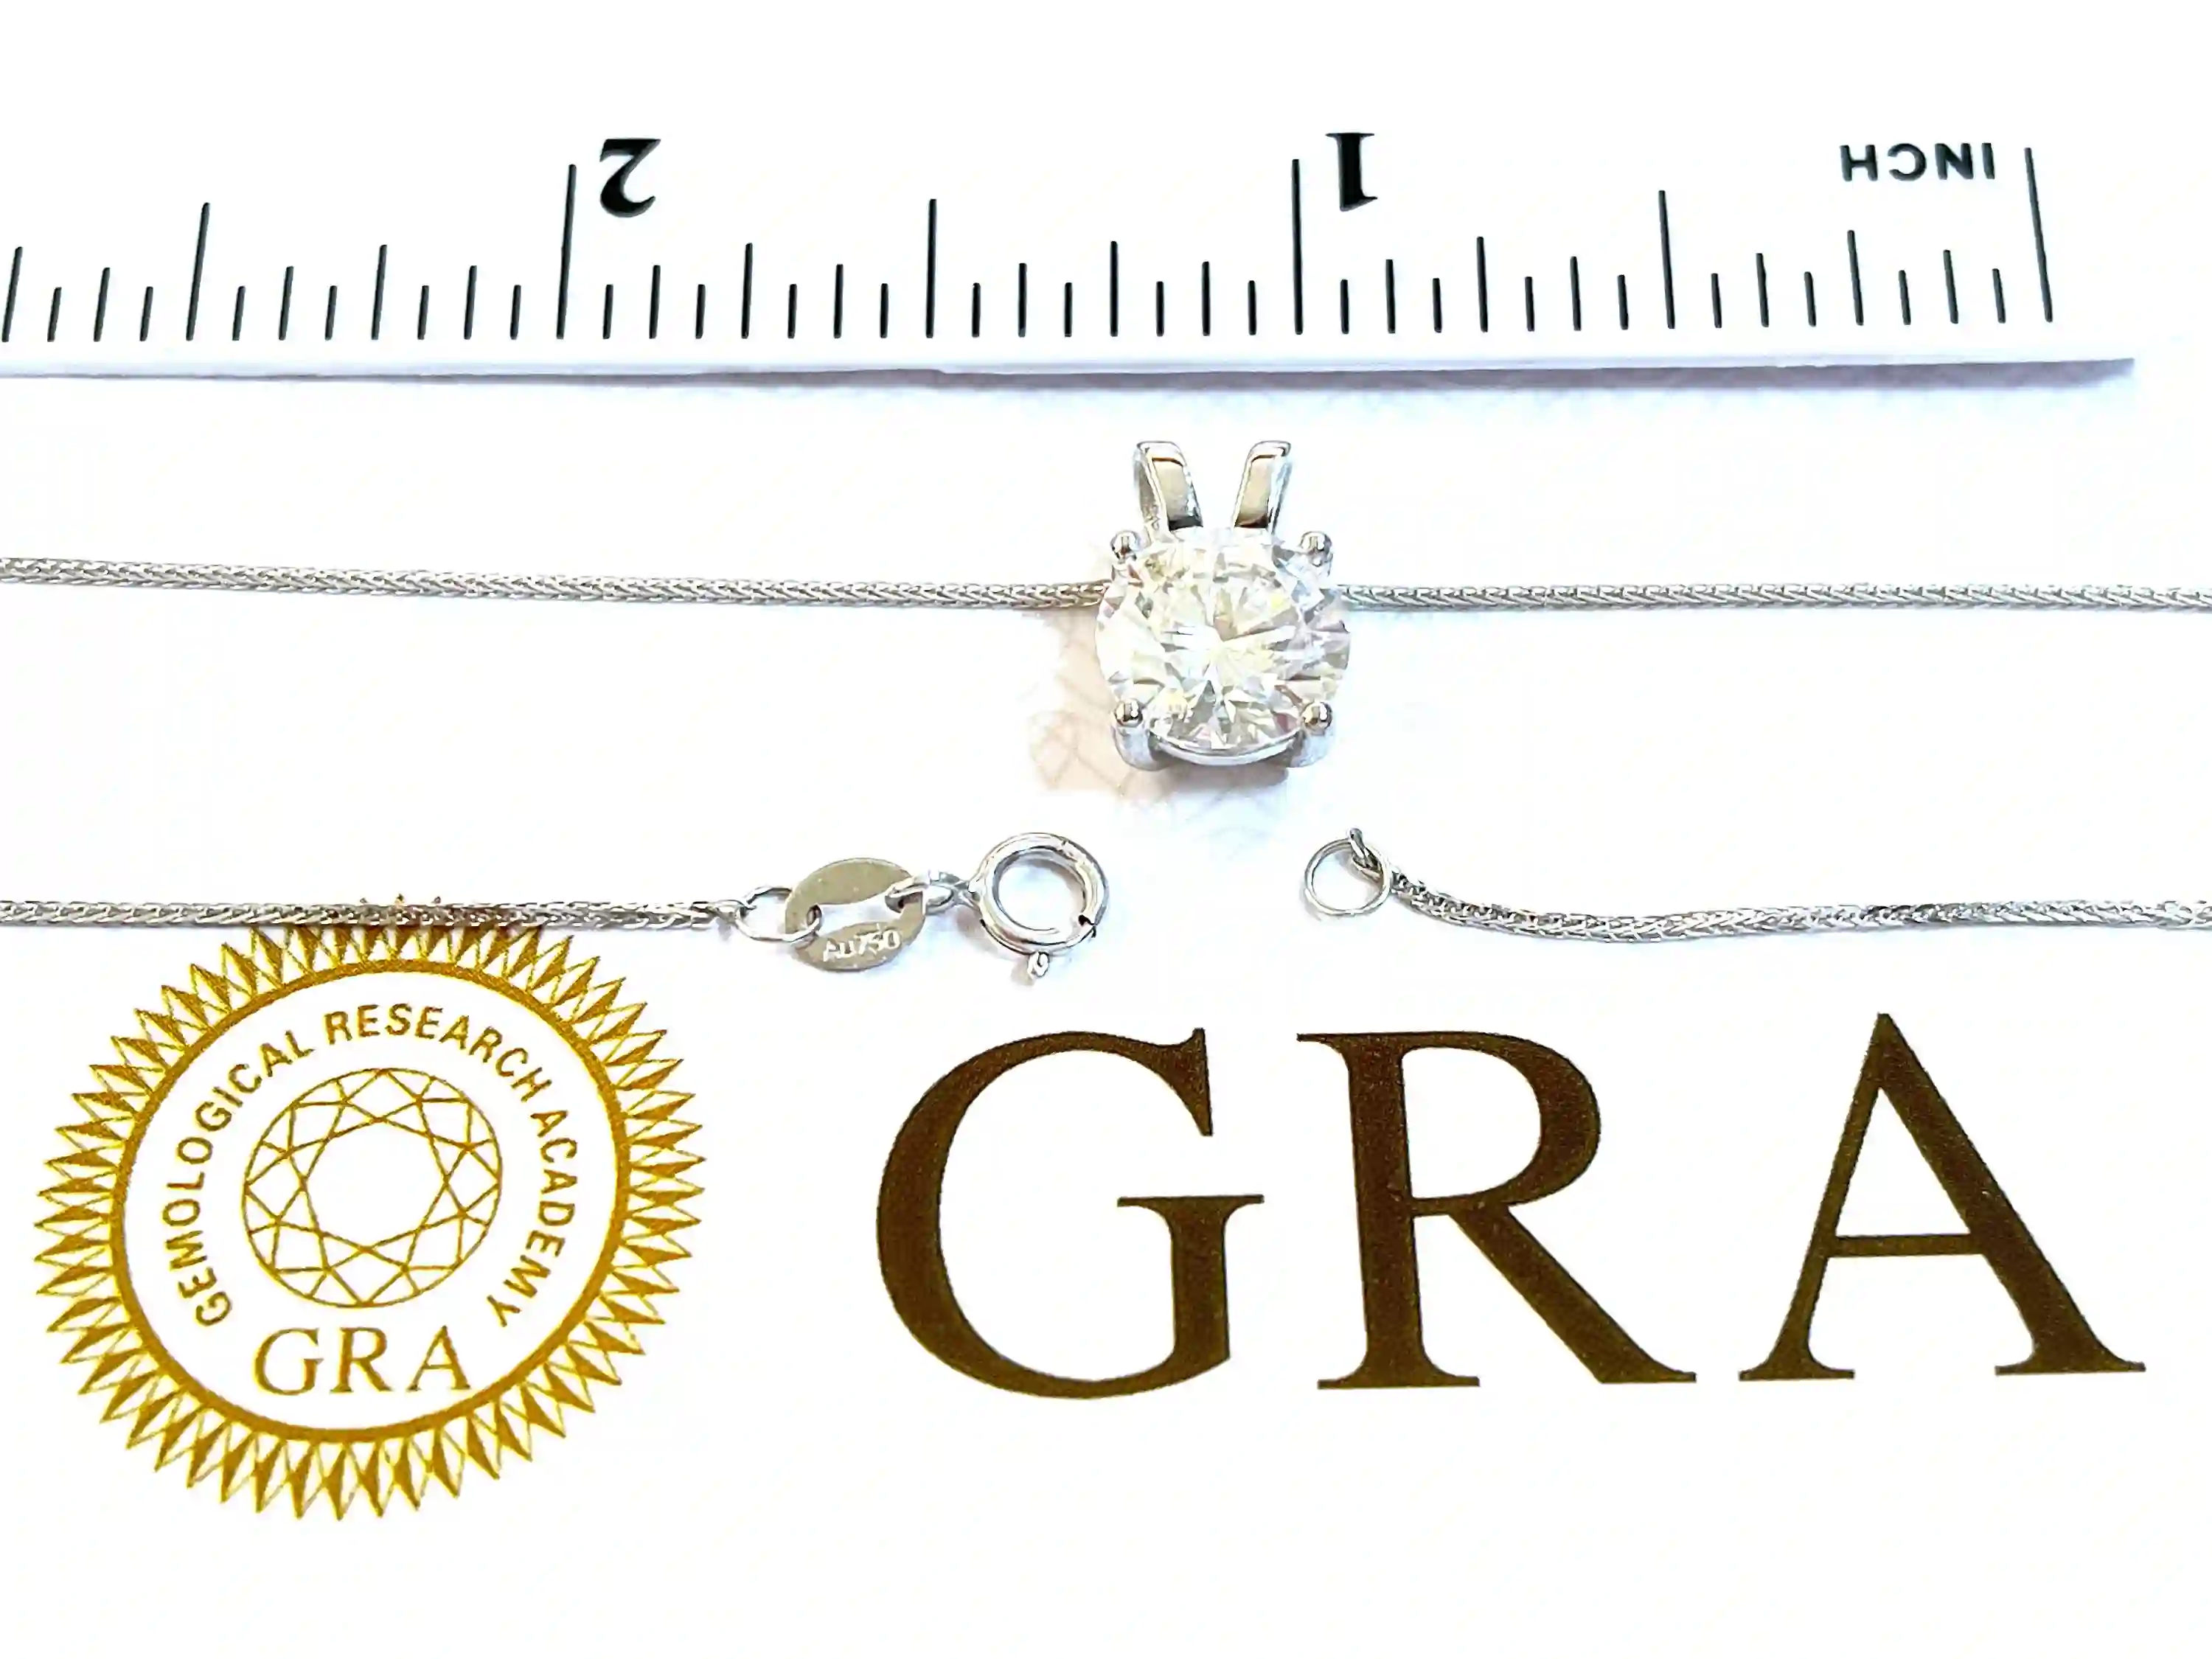 Solid 18k White Gold Necklace Certified Diamond Solitaire Round Cut Pendant Necklace 2 carat VVS1 D Color 8mm Dainty Diamond Necklace Gift 